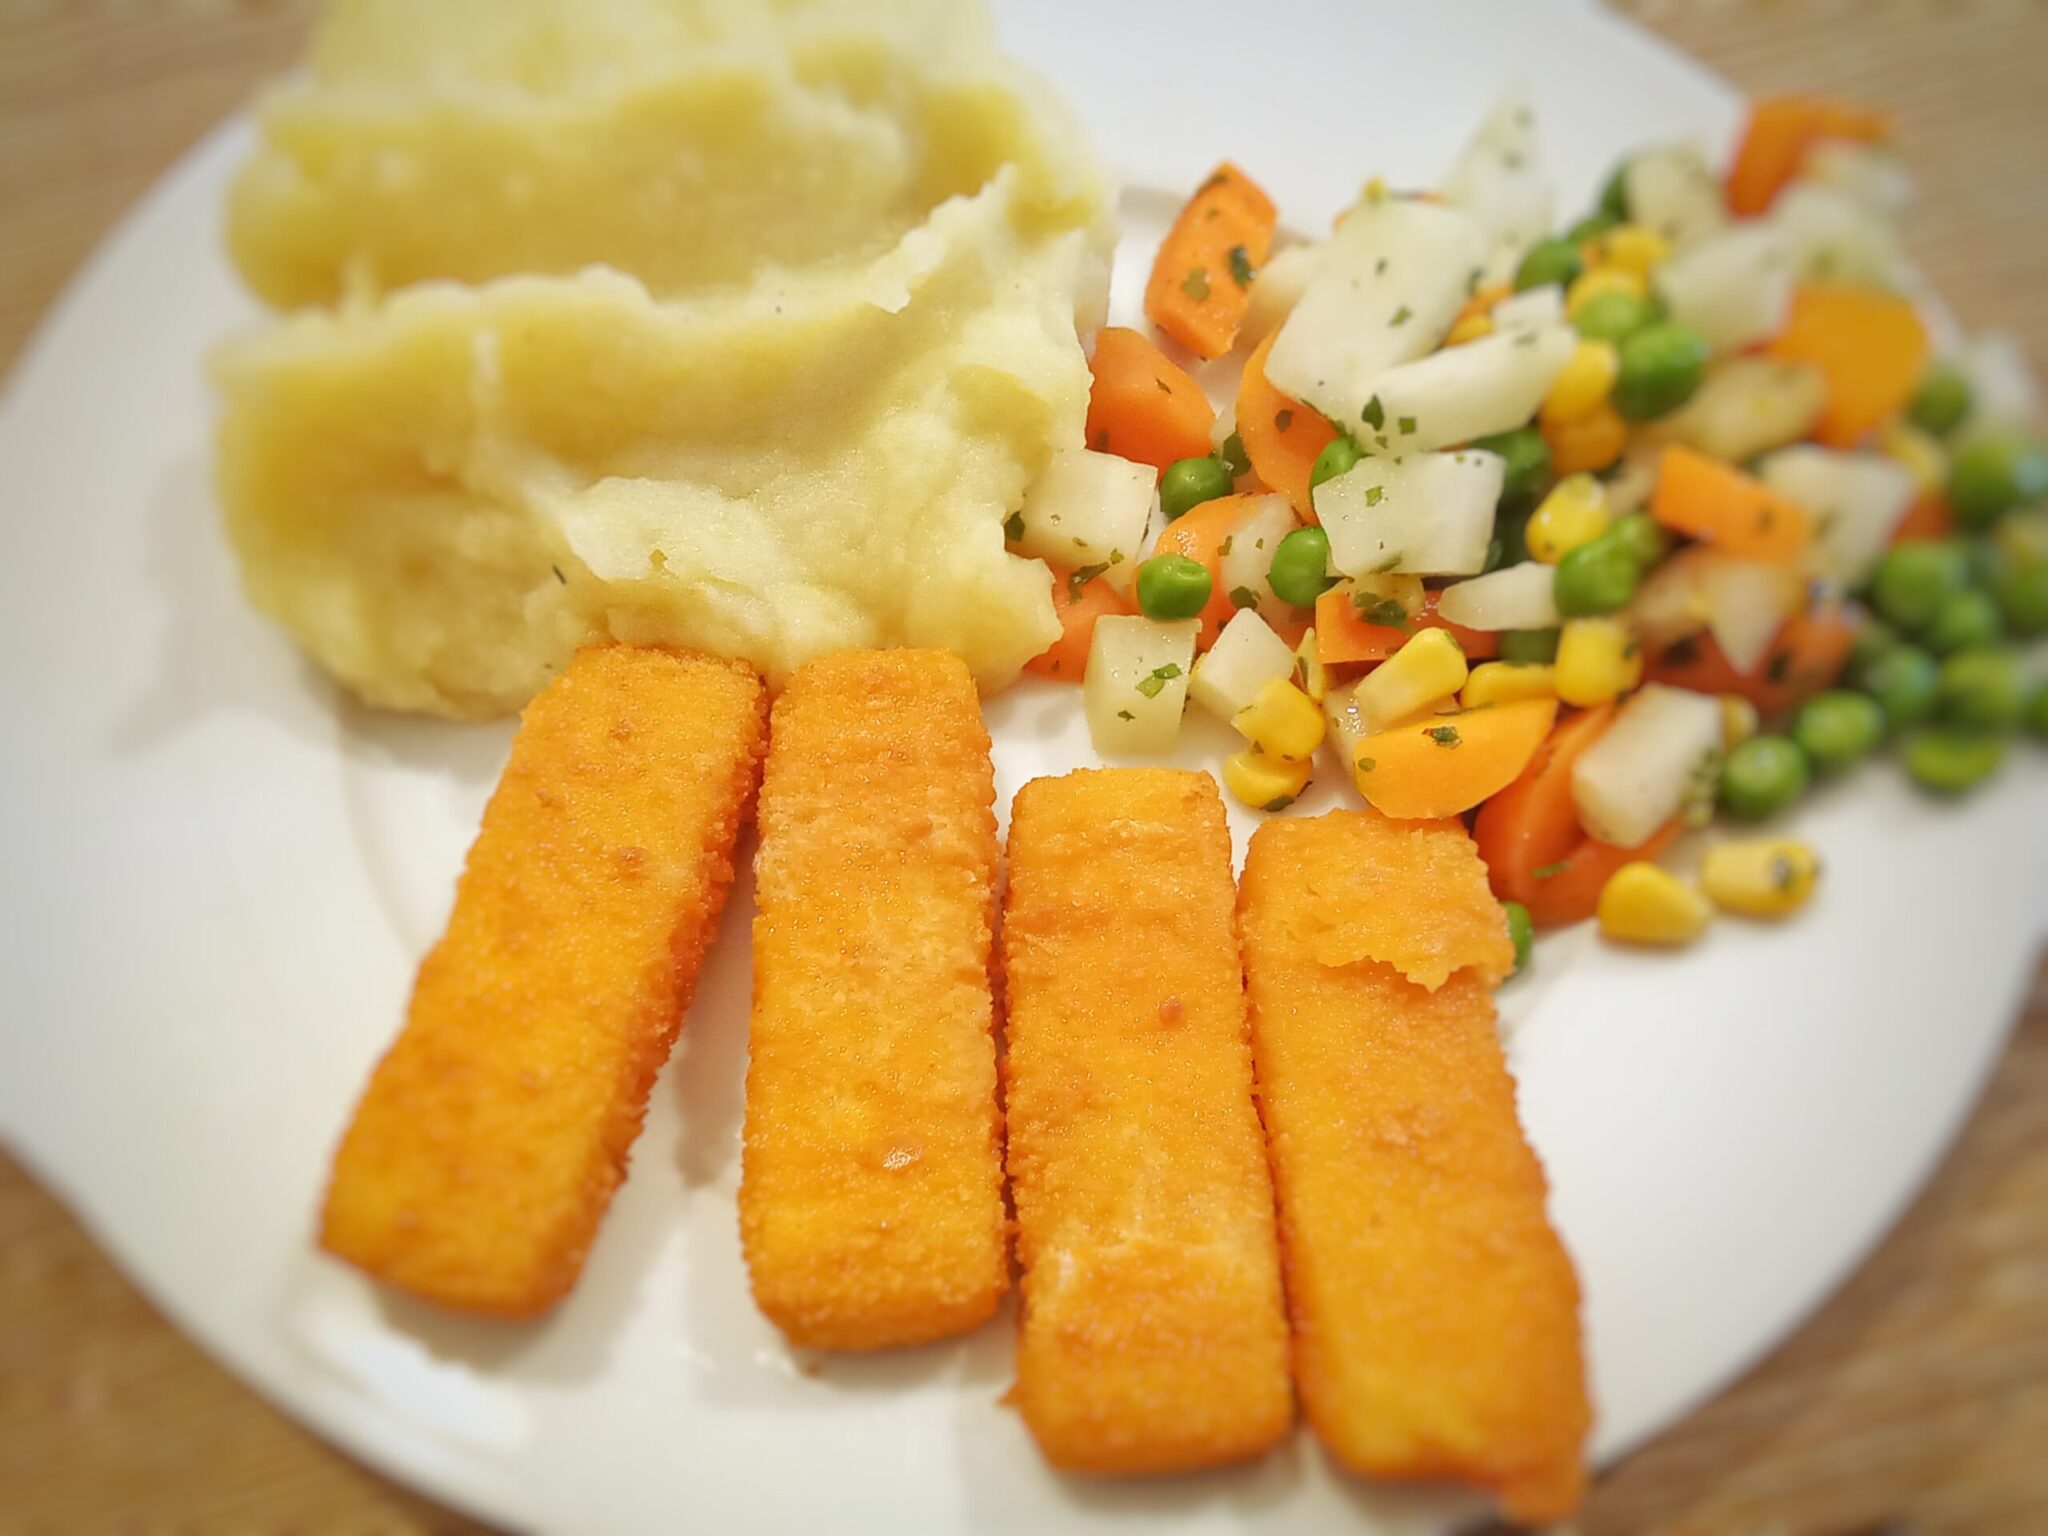 Gemüse mit gerösteten Cashewkernen - herdsport.de